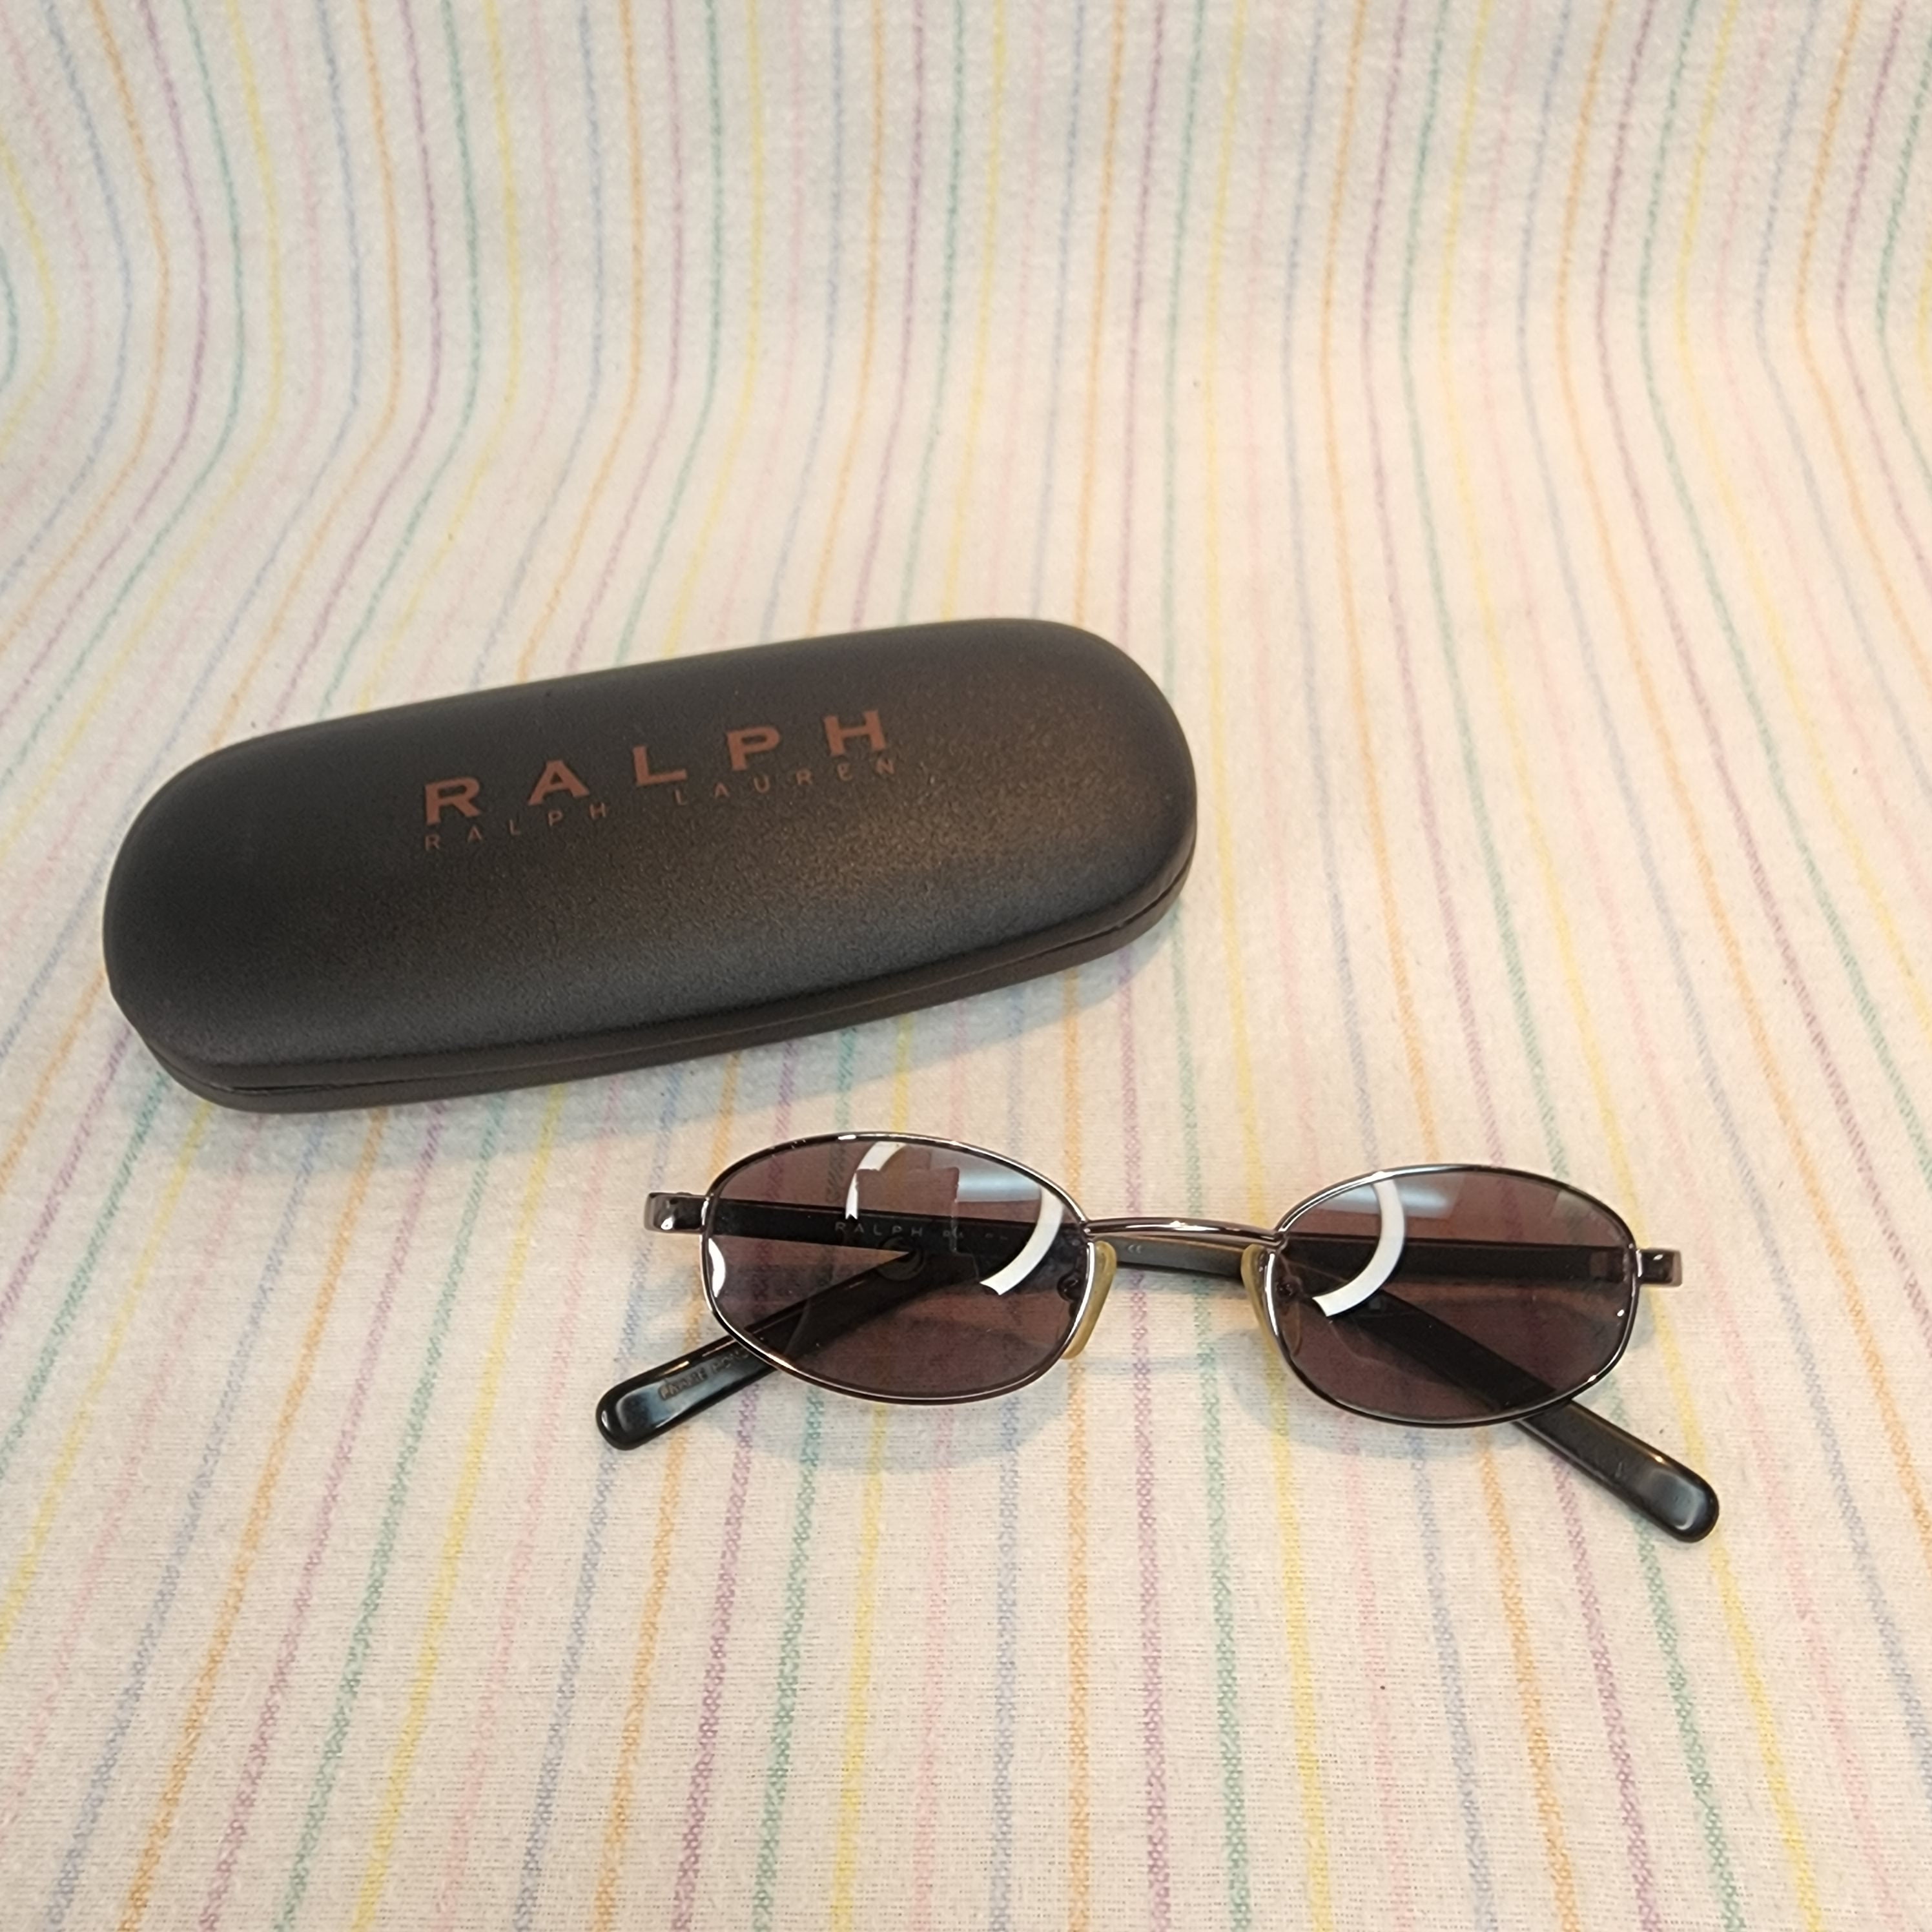 2 Pairs Vintage Oval Sunglasses Small Oval Sunglasses Mini Vintage Stylish Round Eyeglasses for Women Girls Men 